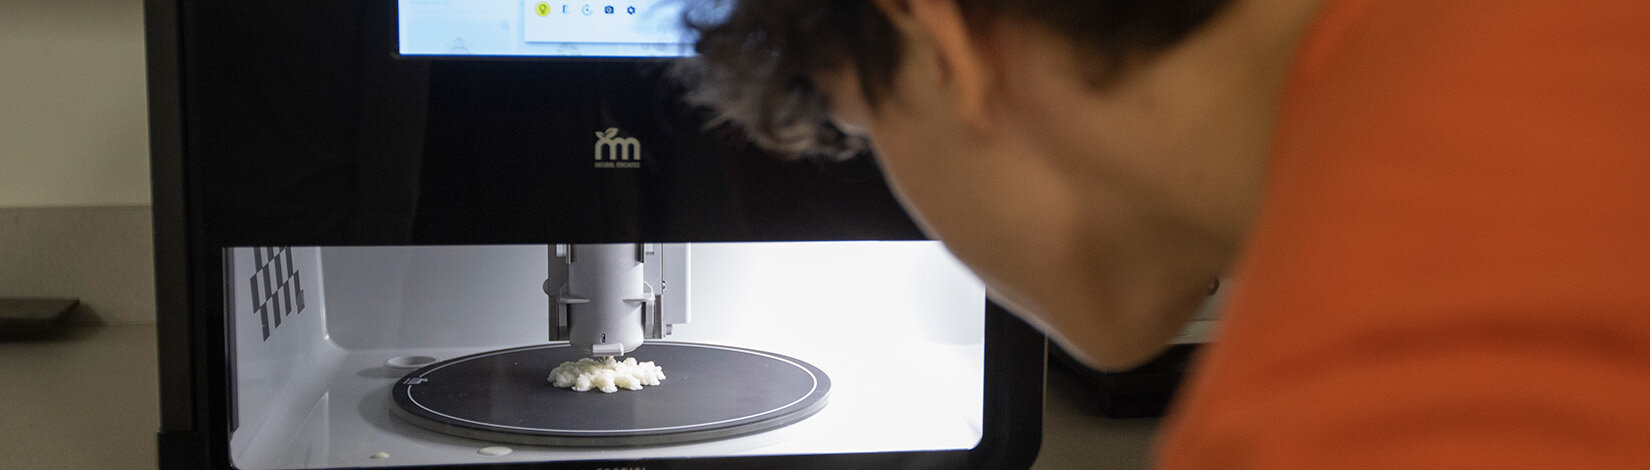 #Scientists explore 3D food printing possibilities